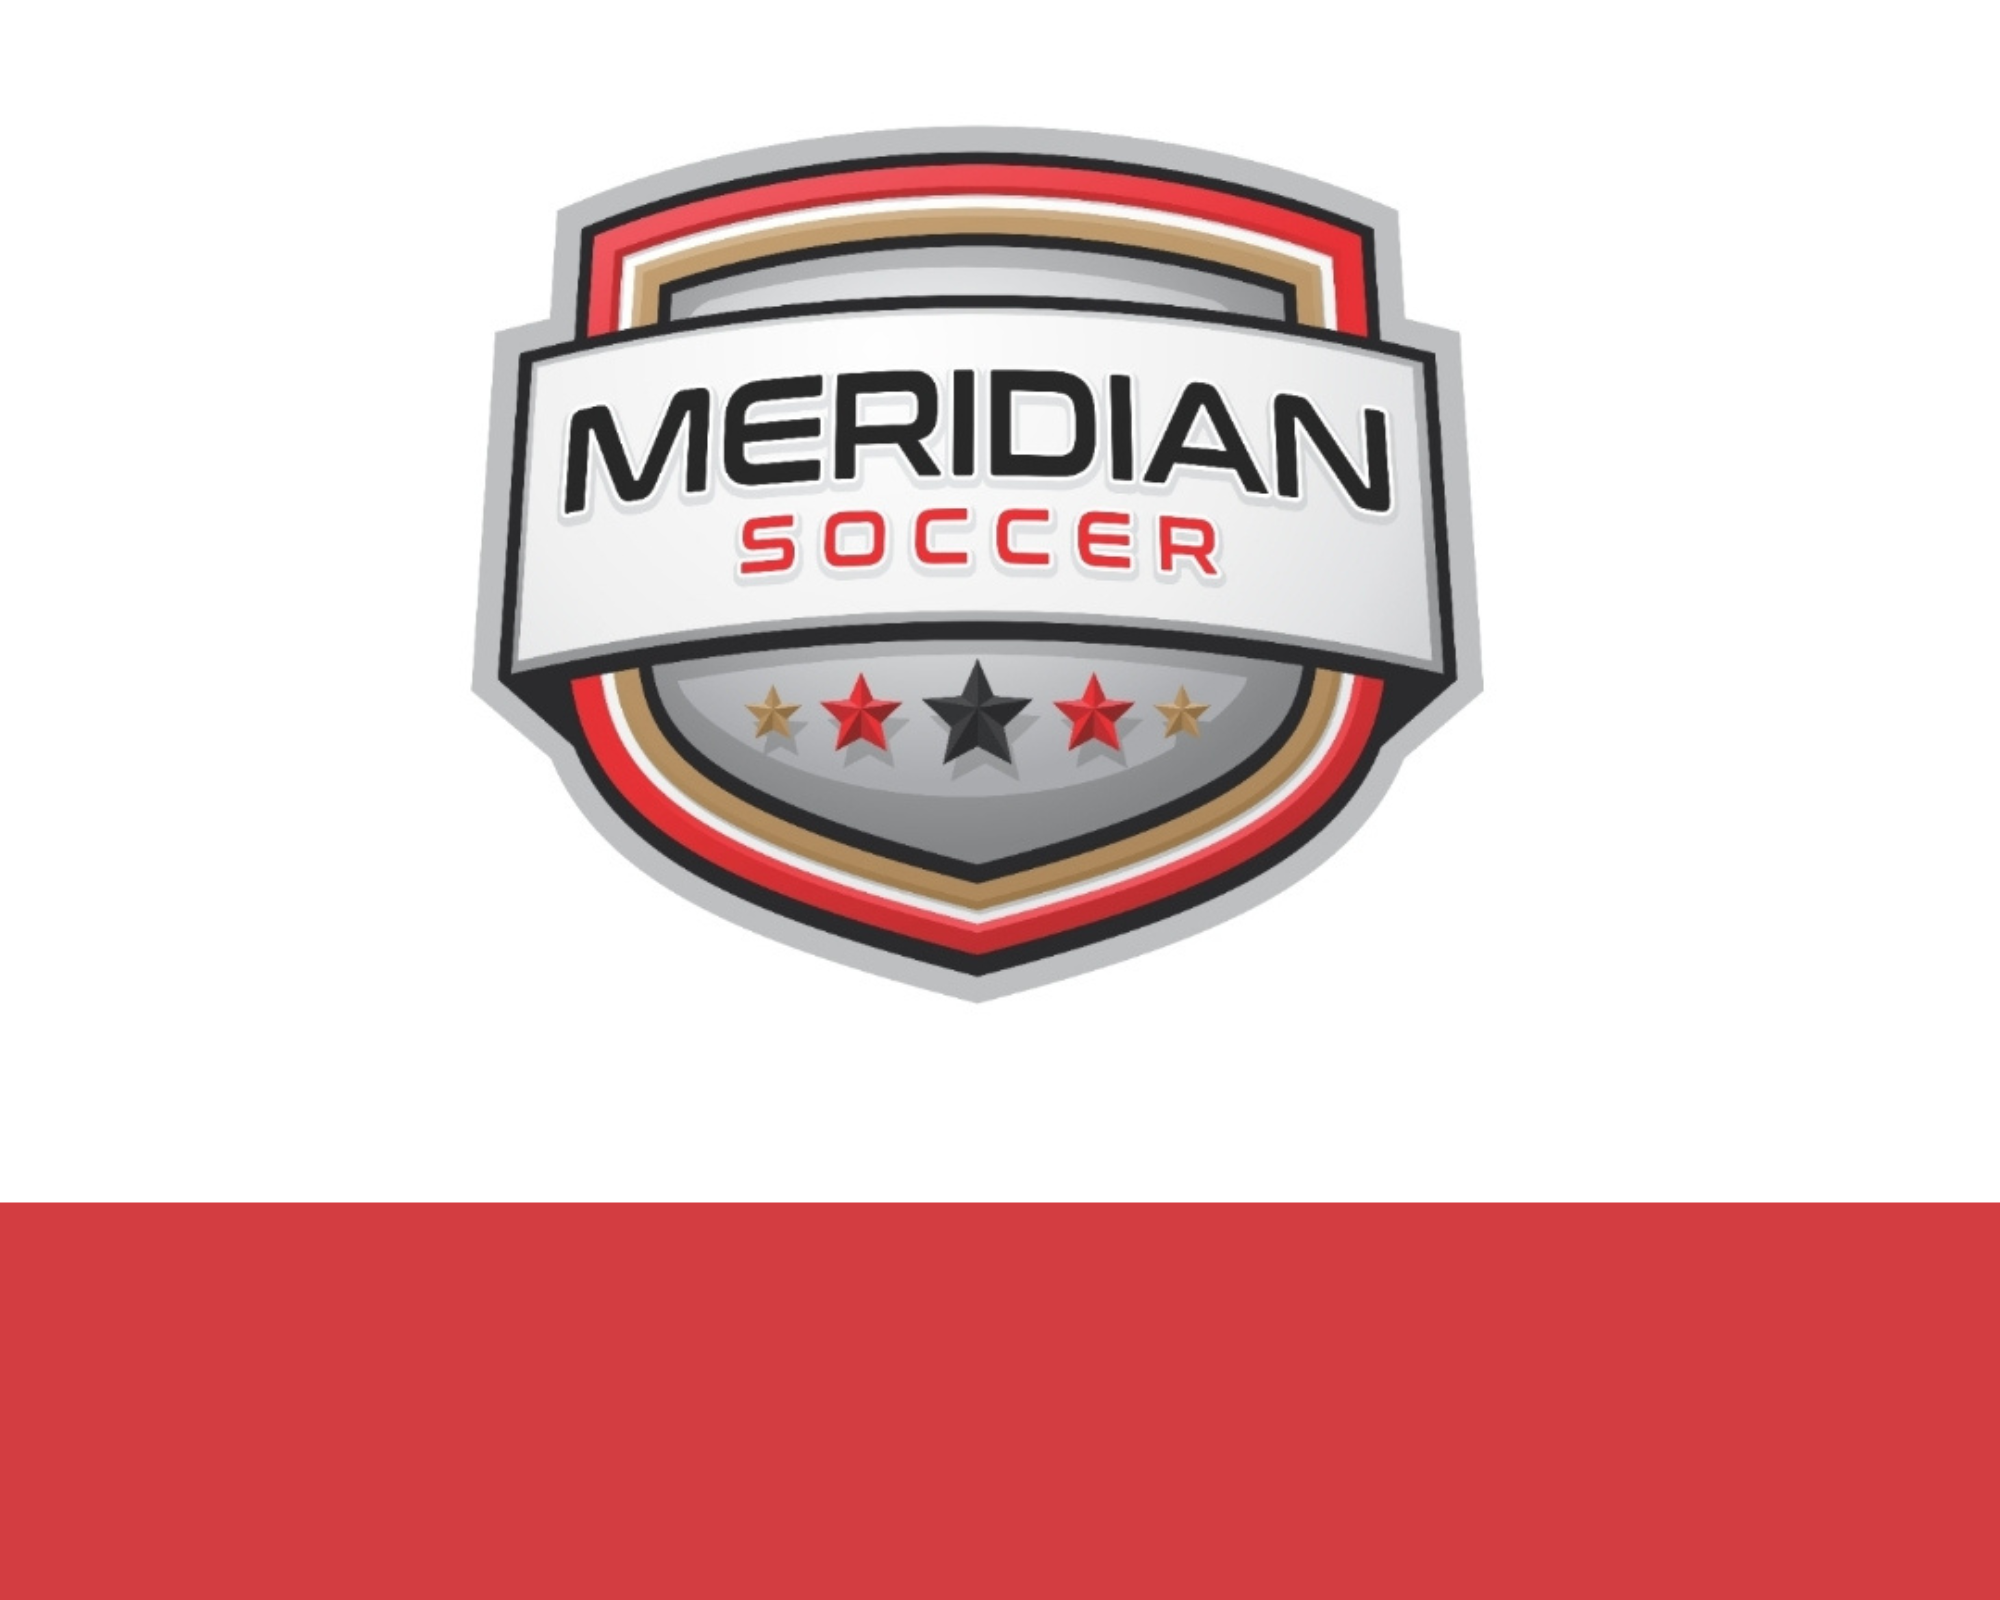 Meridian Soccer Facebook